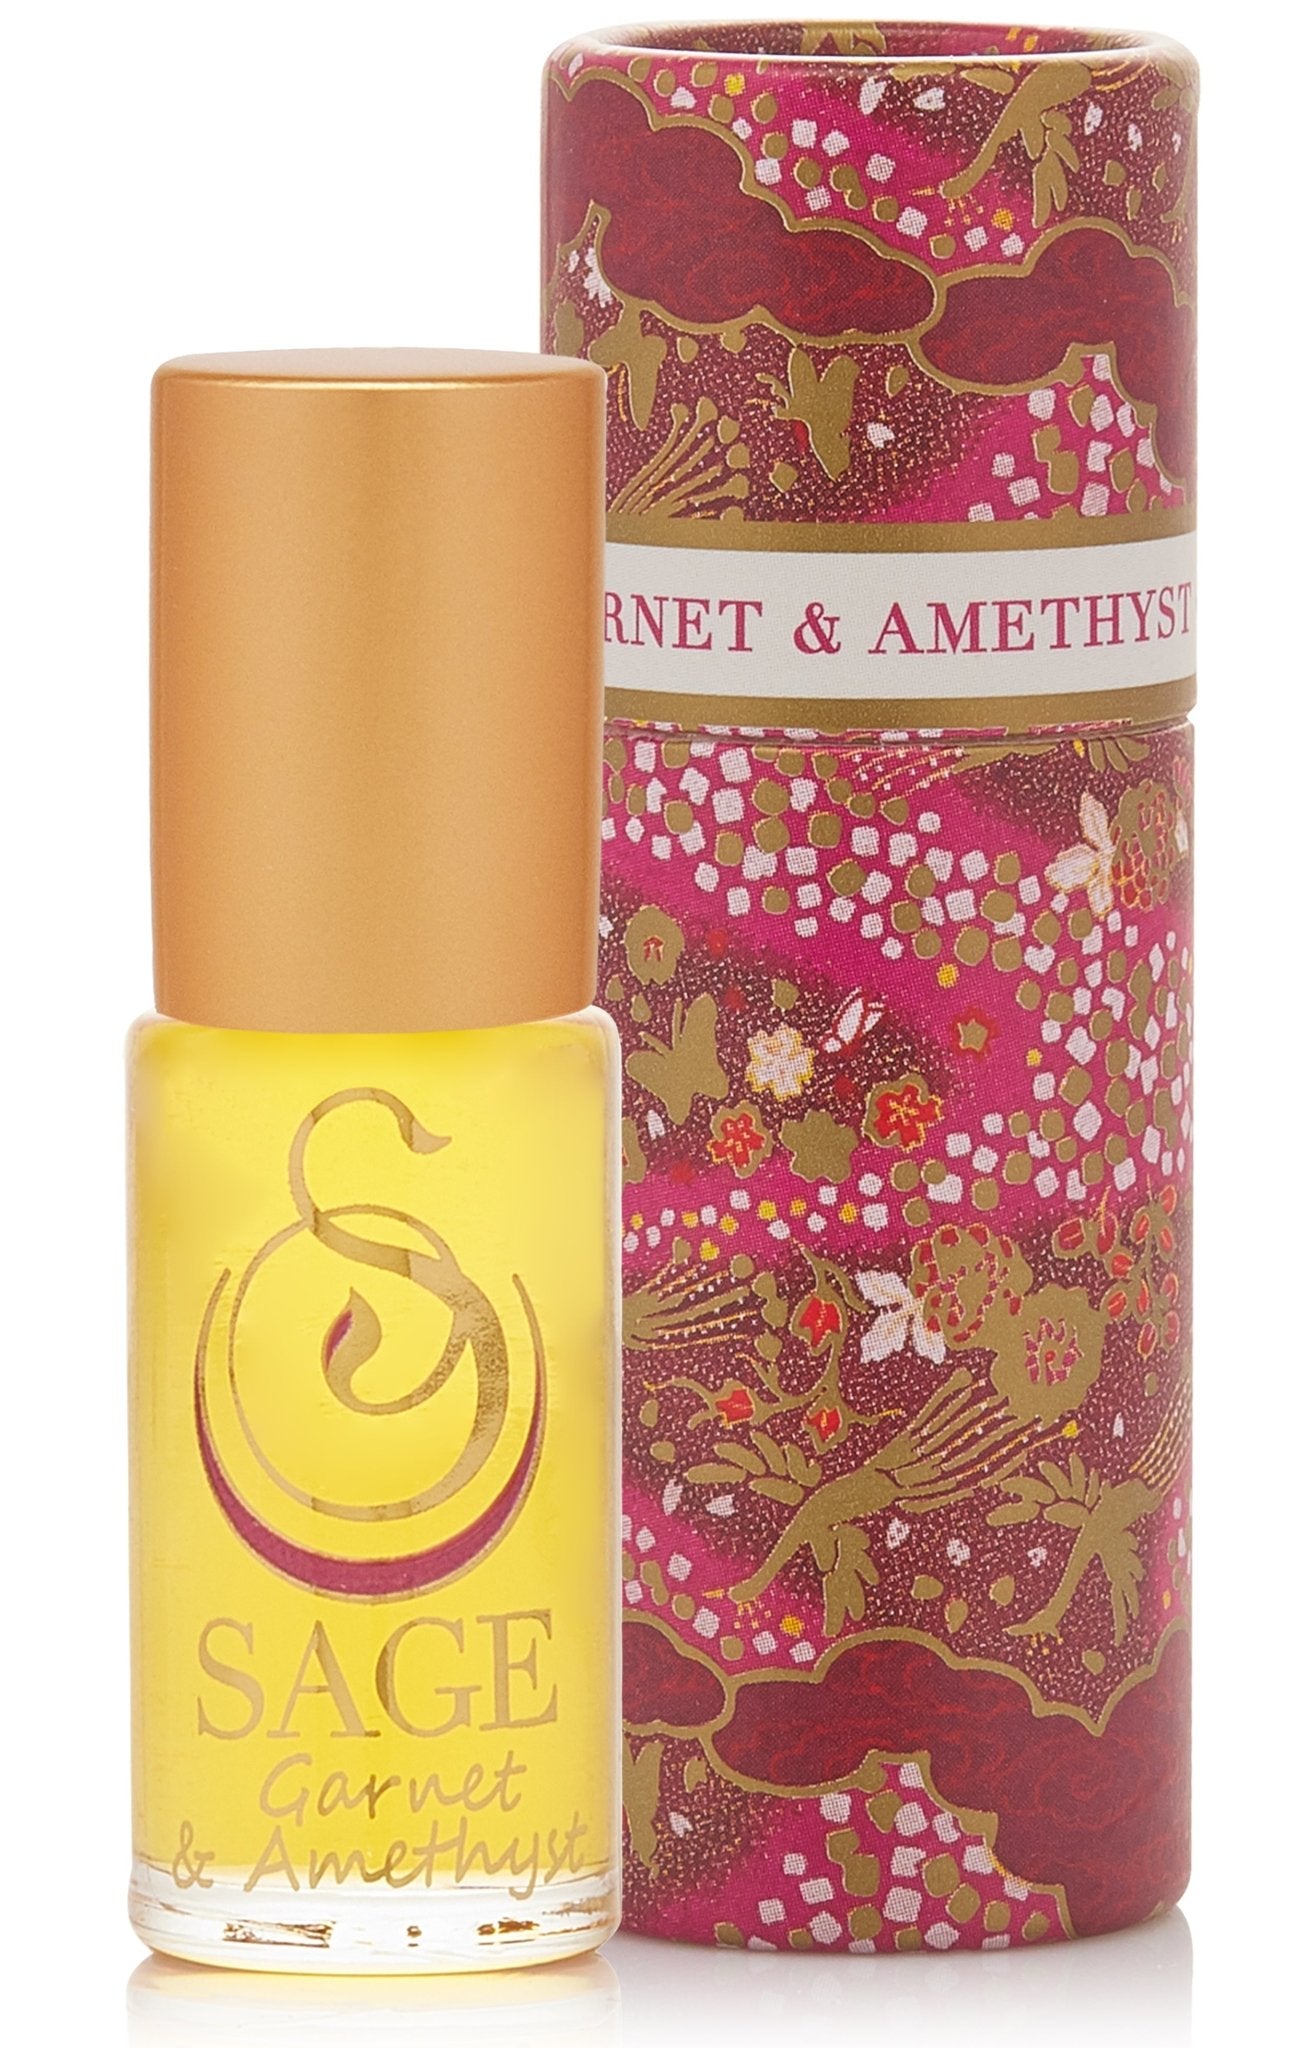 Garnet &amp; Amethyst Blend Gemstone Perfume Oil Roll-On by Sage - The Sage Lifestyle